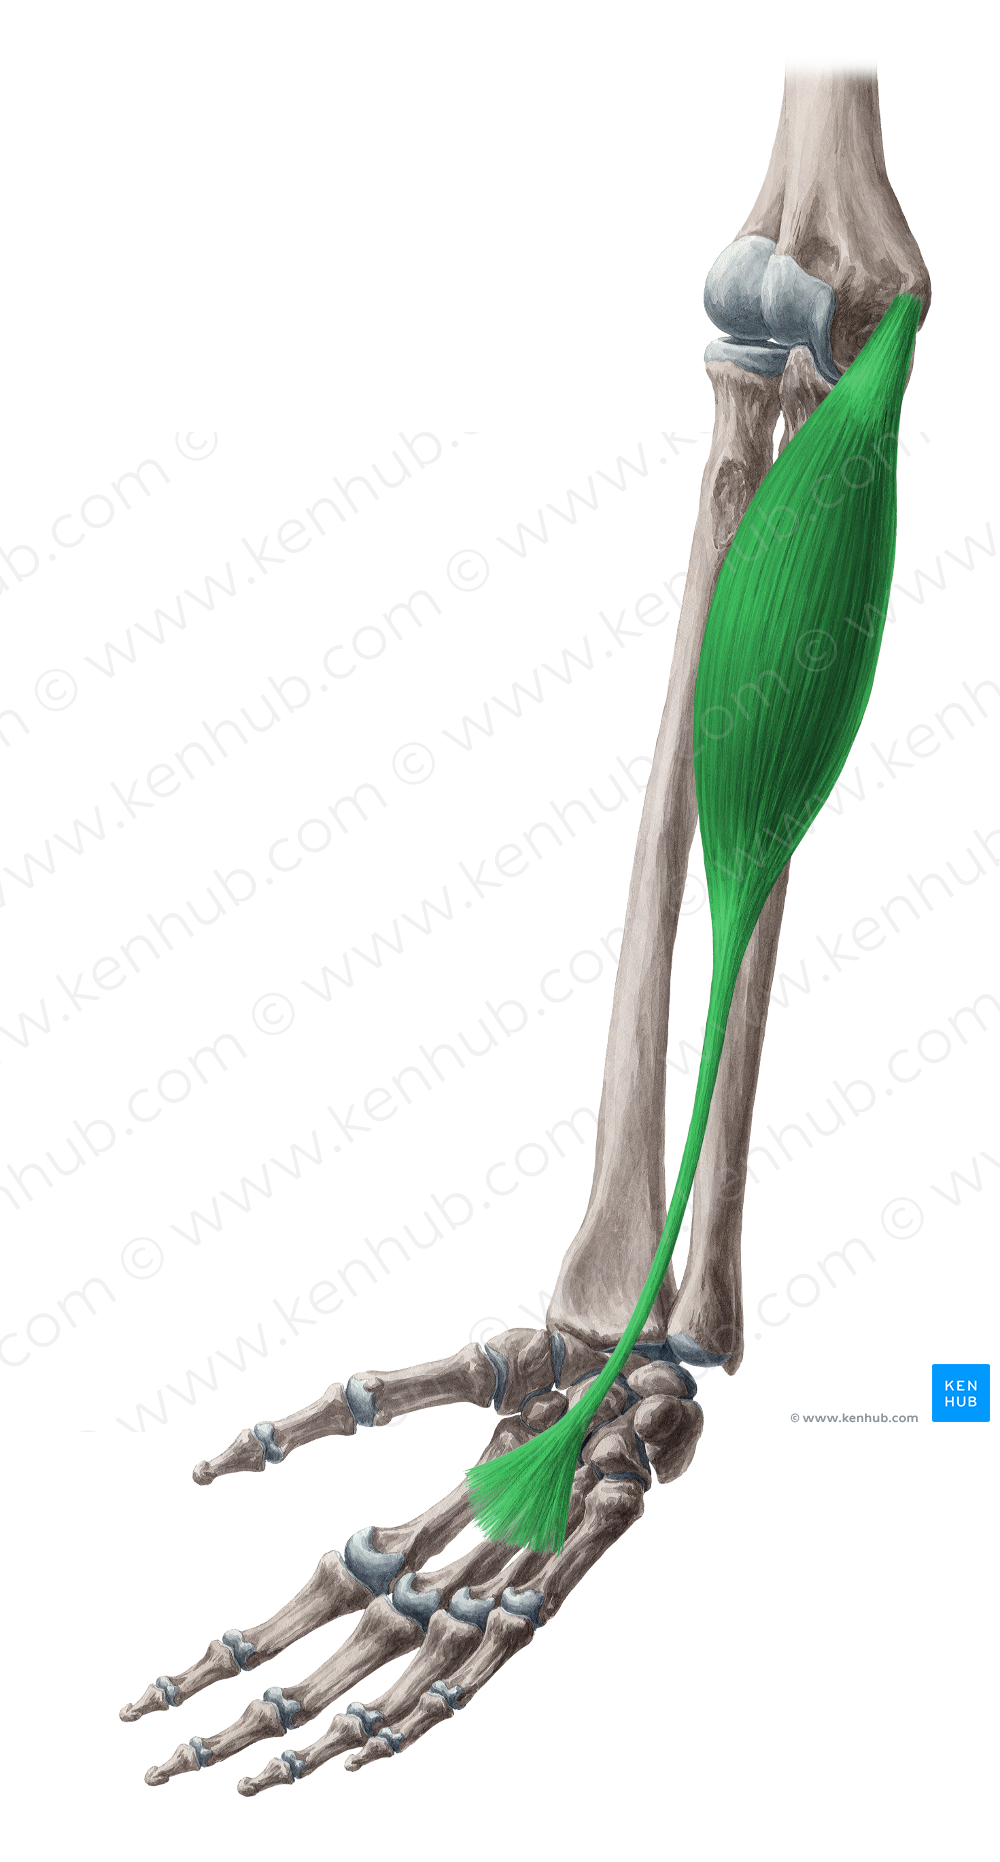 Palmaris longus muscle (#5708)